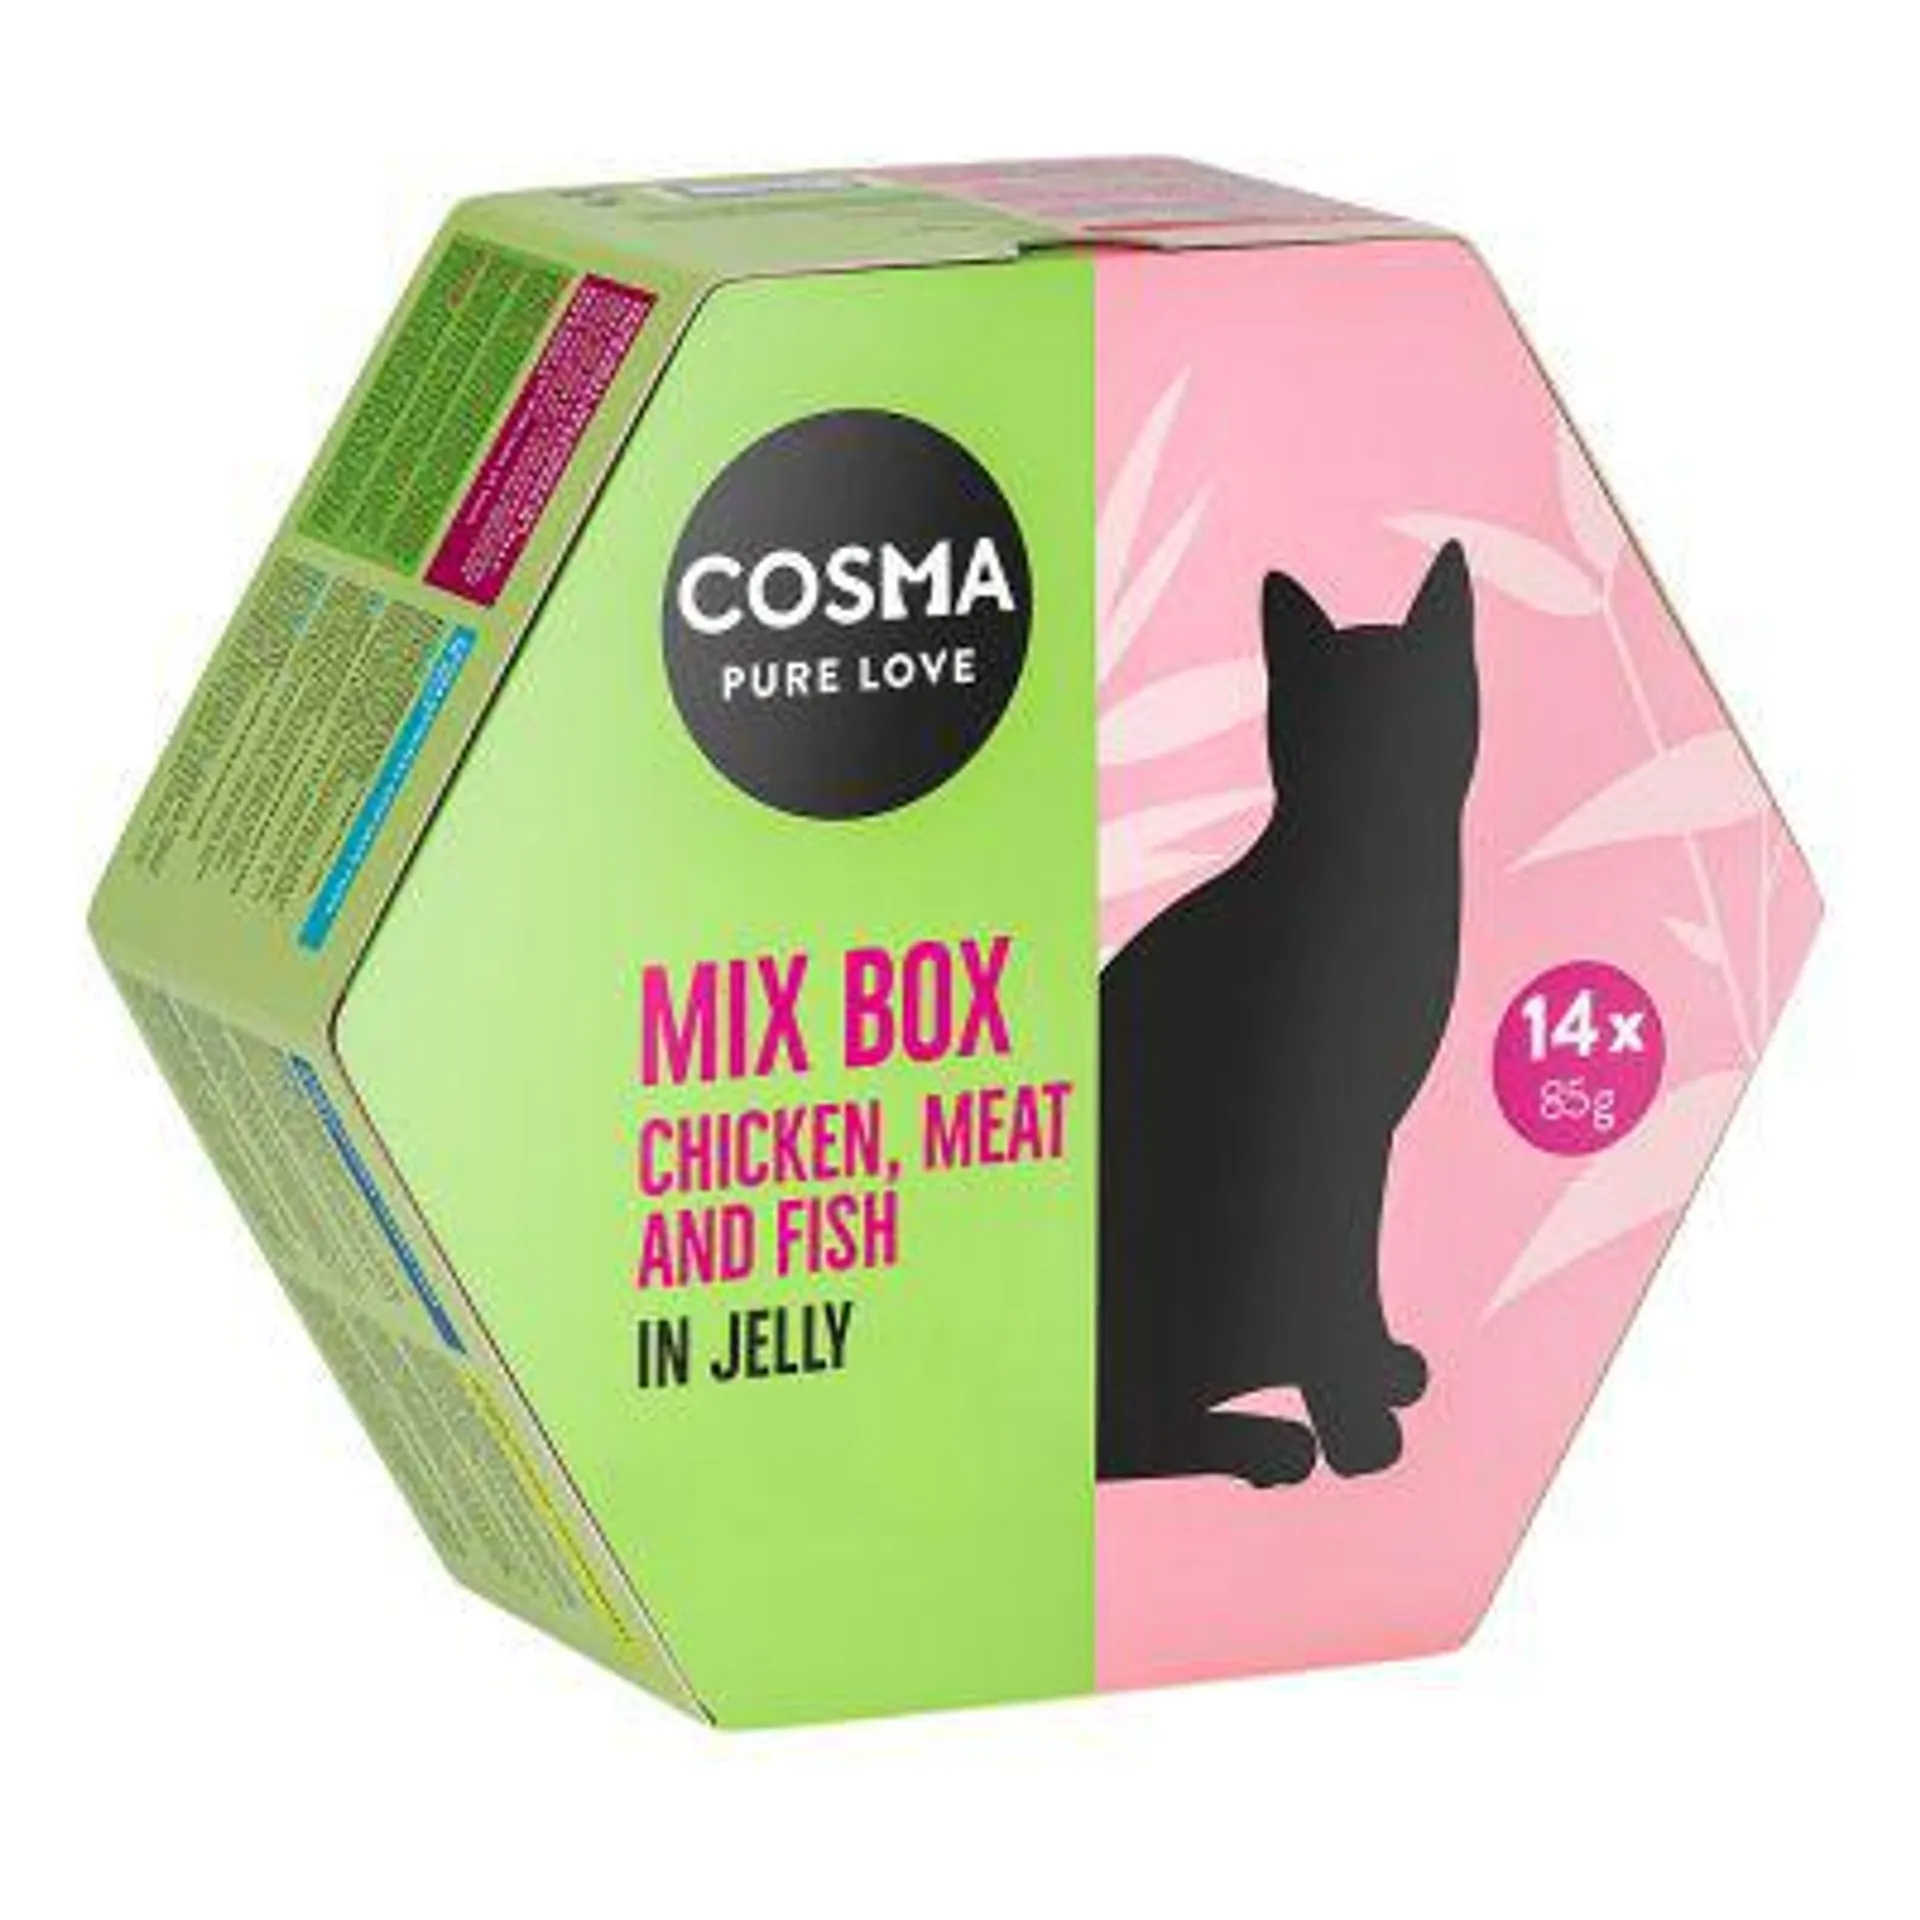 Cosma Mix Box